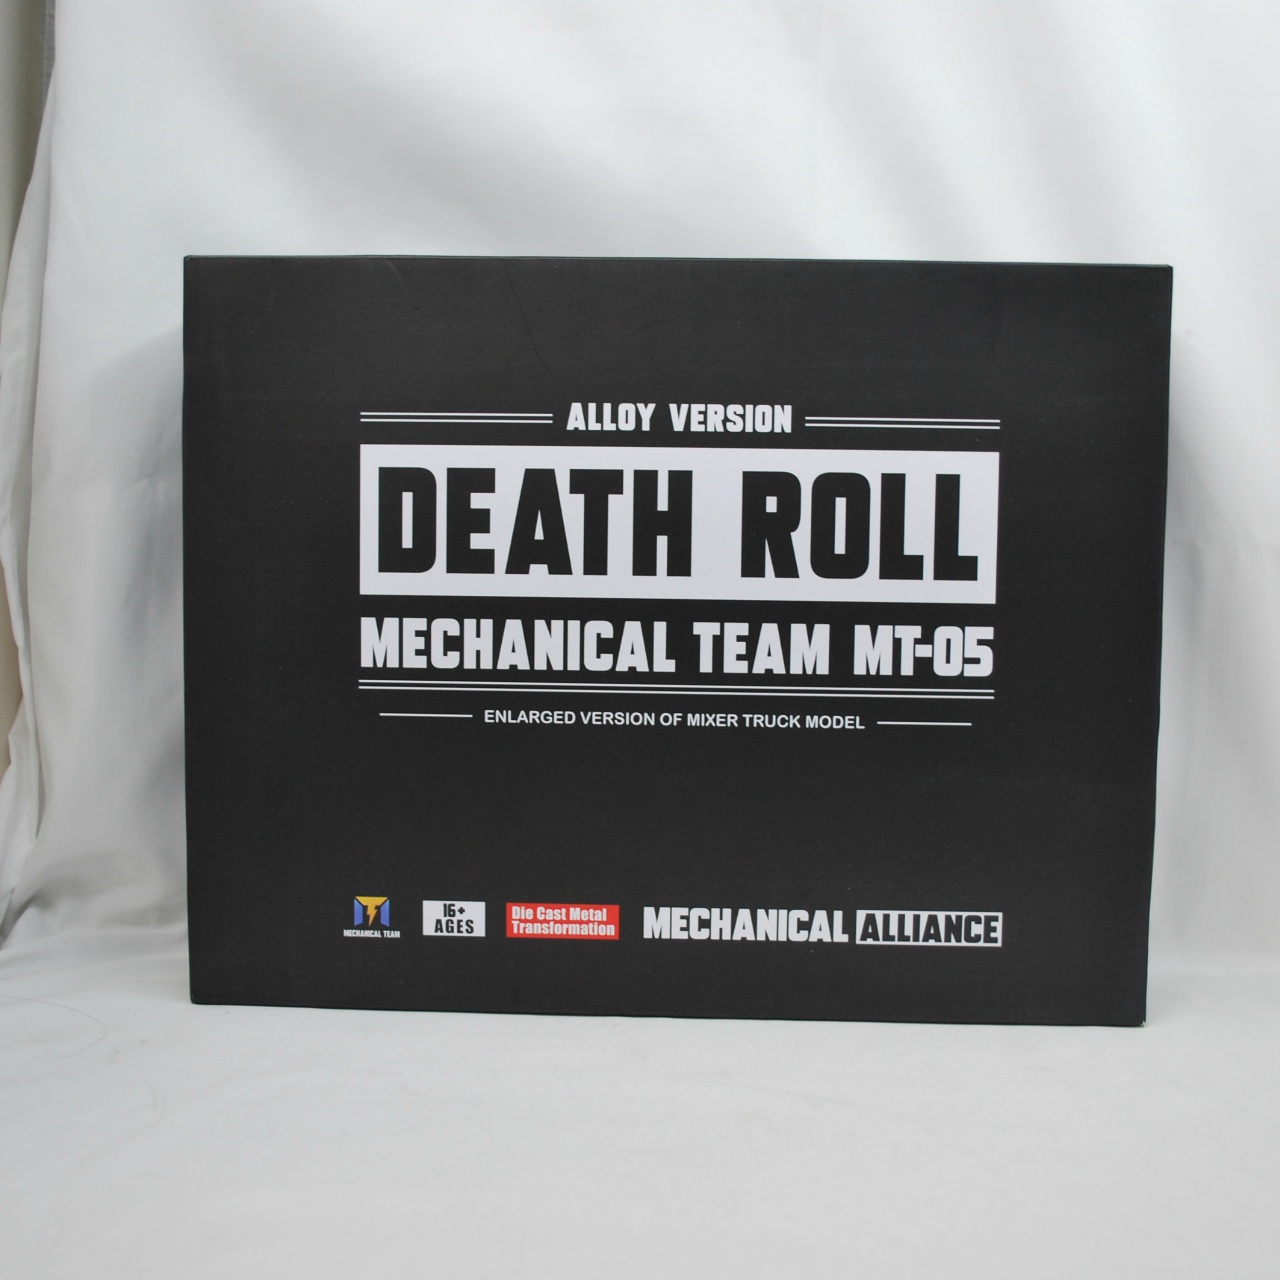 MECHANICAL TEAM MT-05 DEATH ROLL ALLOY VERSION